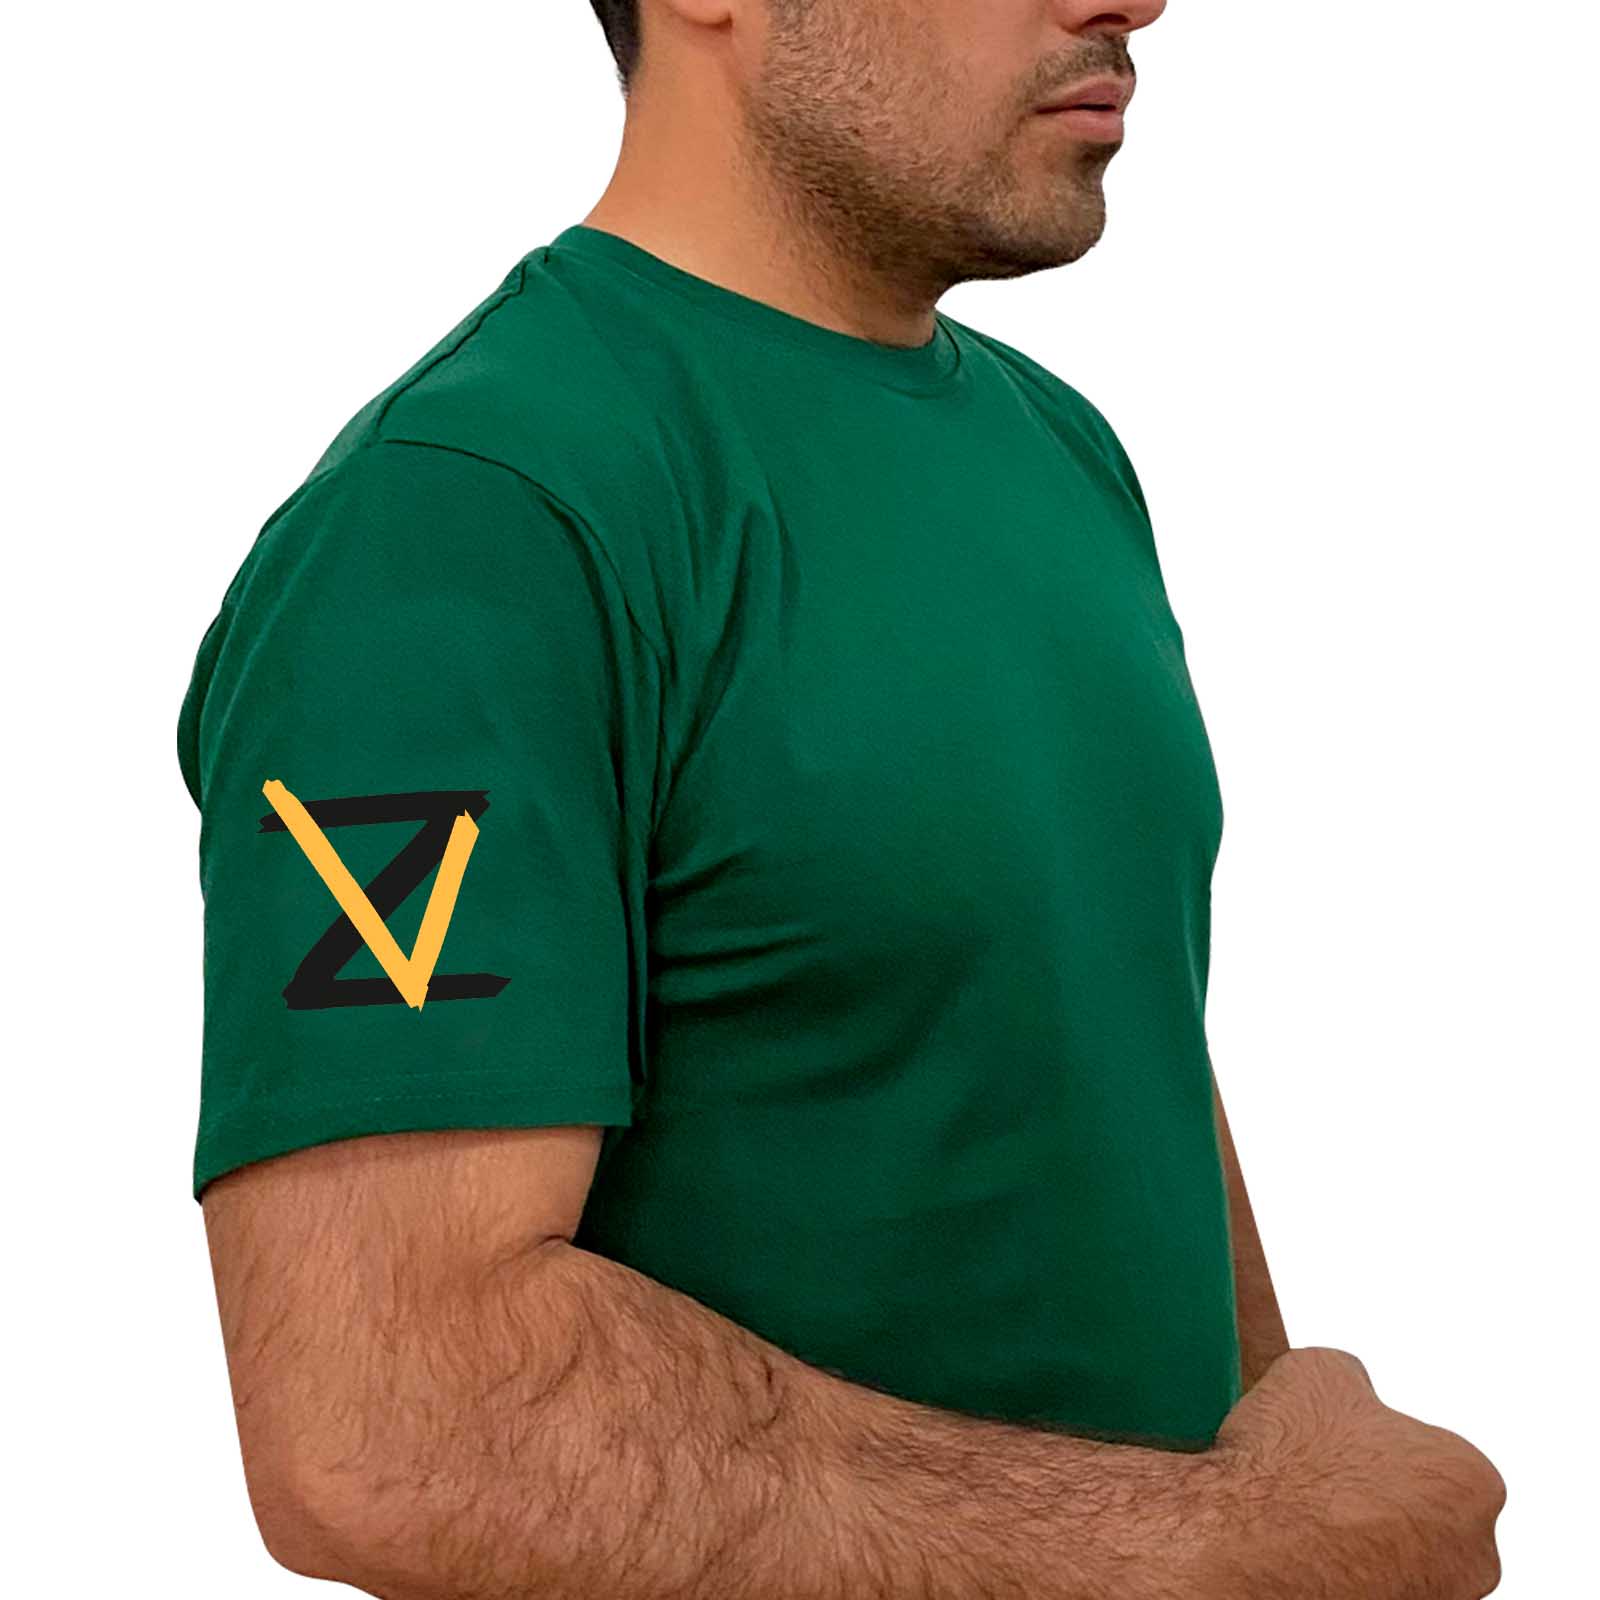 Зелёная футболка с термопереводкой ZV на рукаве